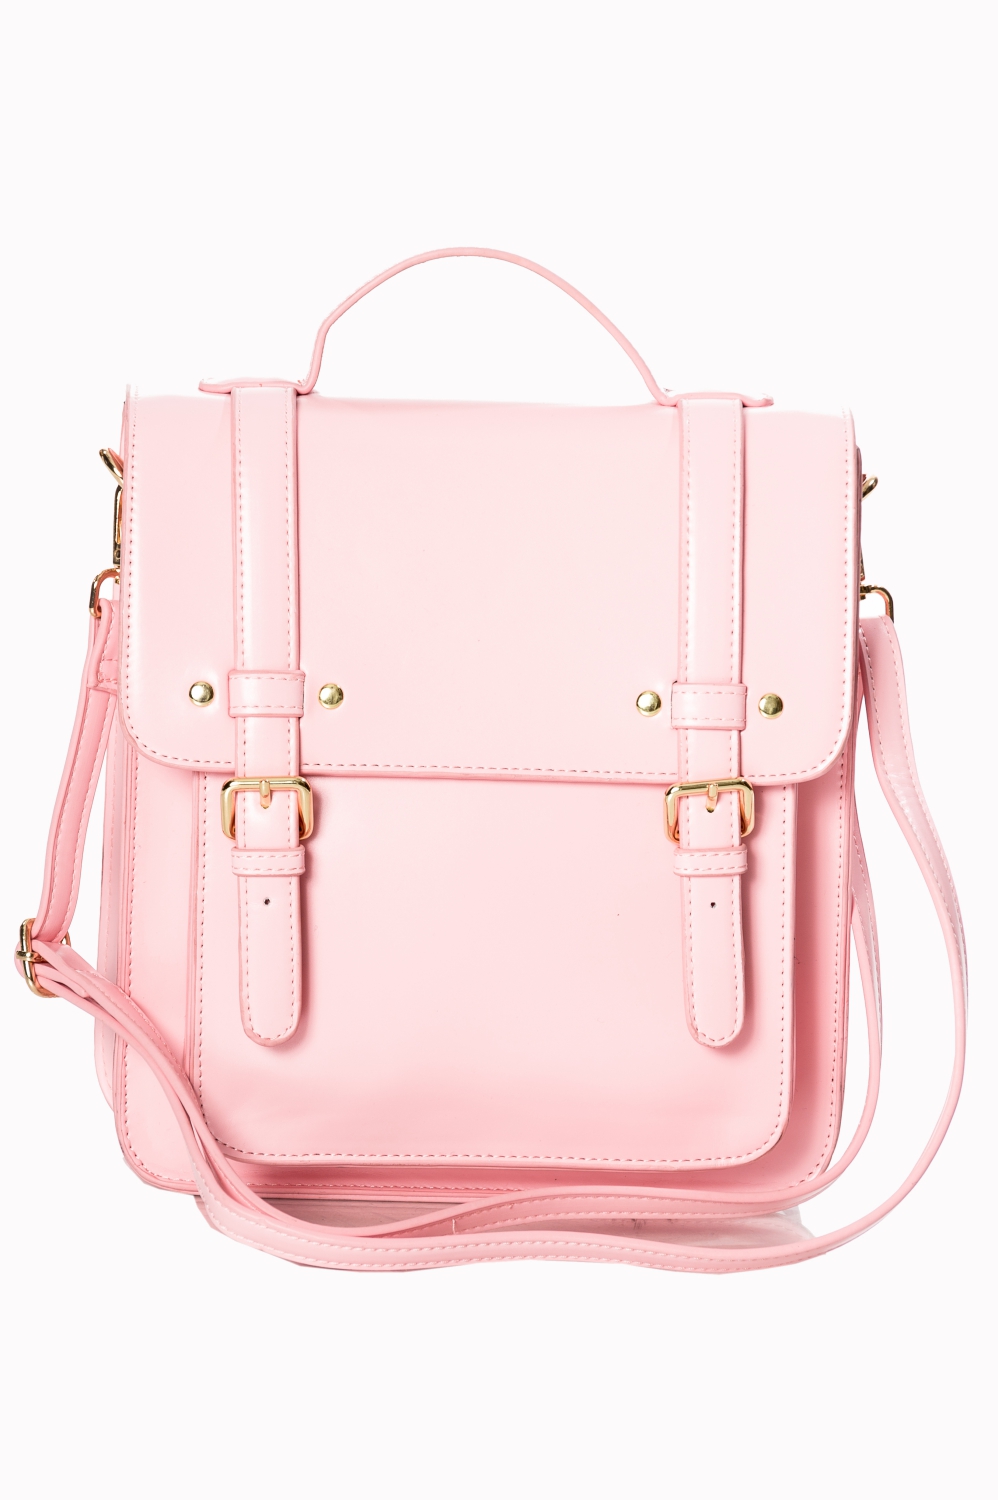 Banned Retro 60s Cohen Baby Pink Handbag